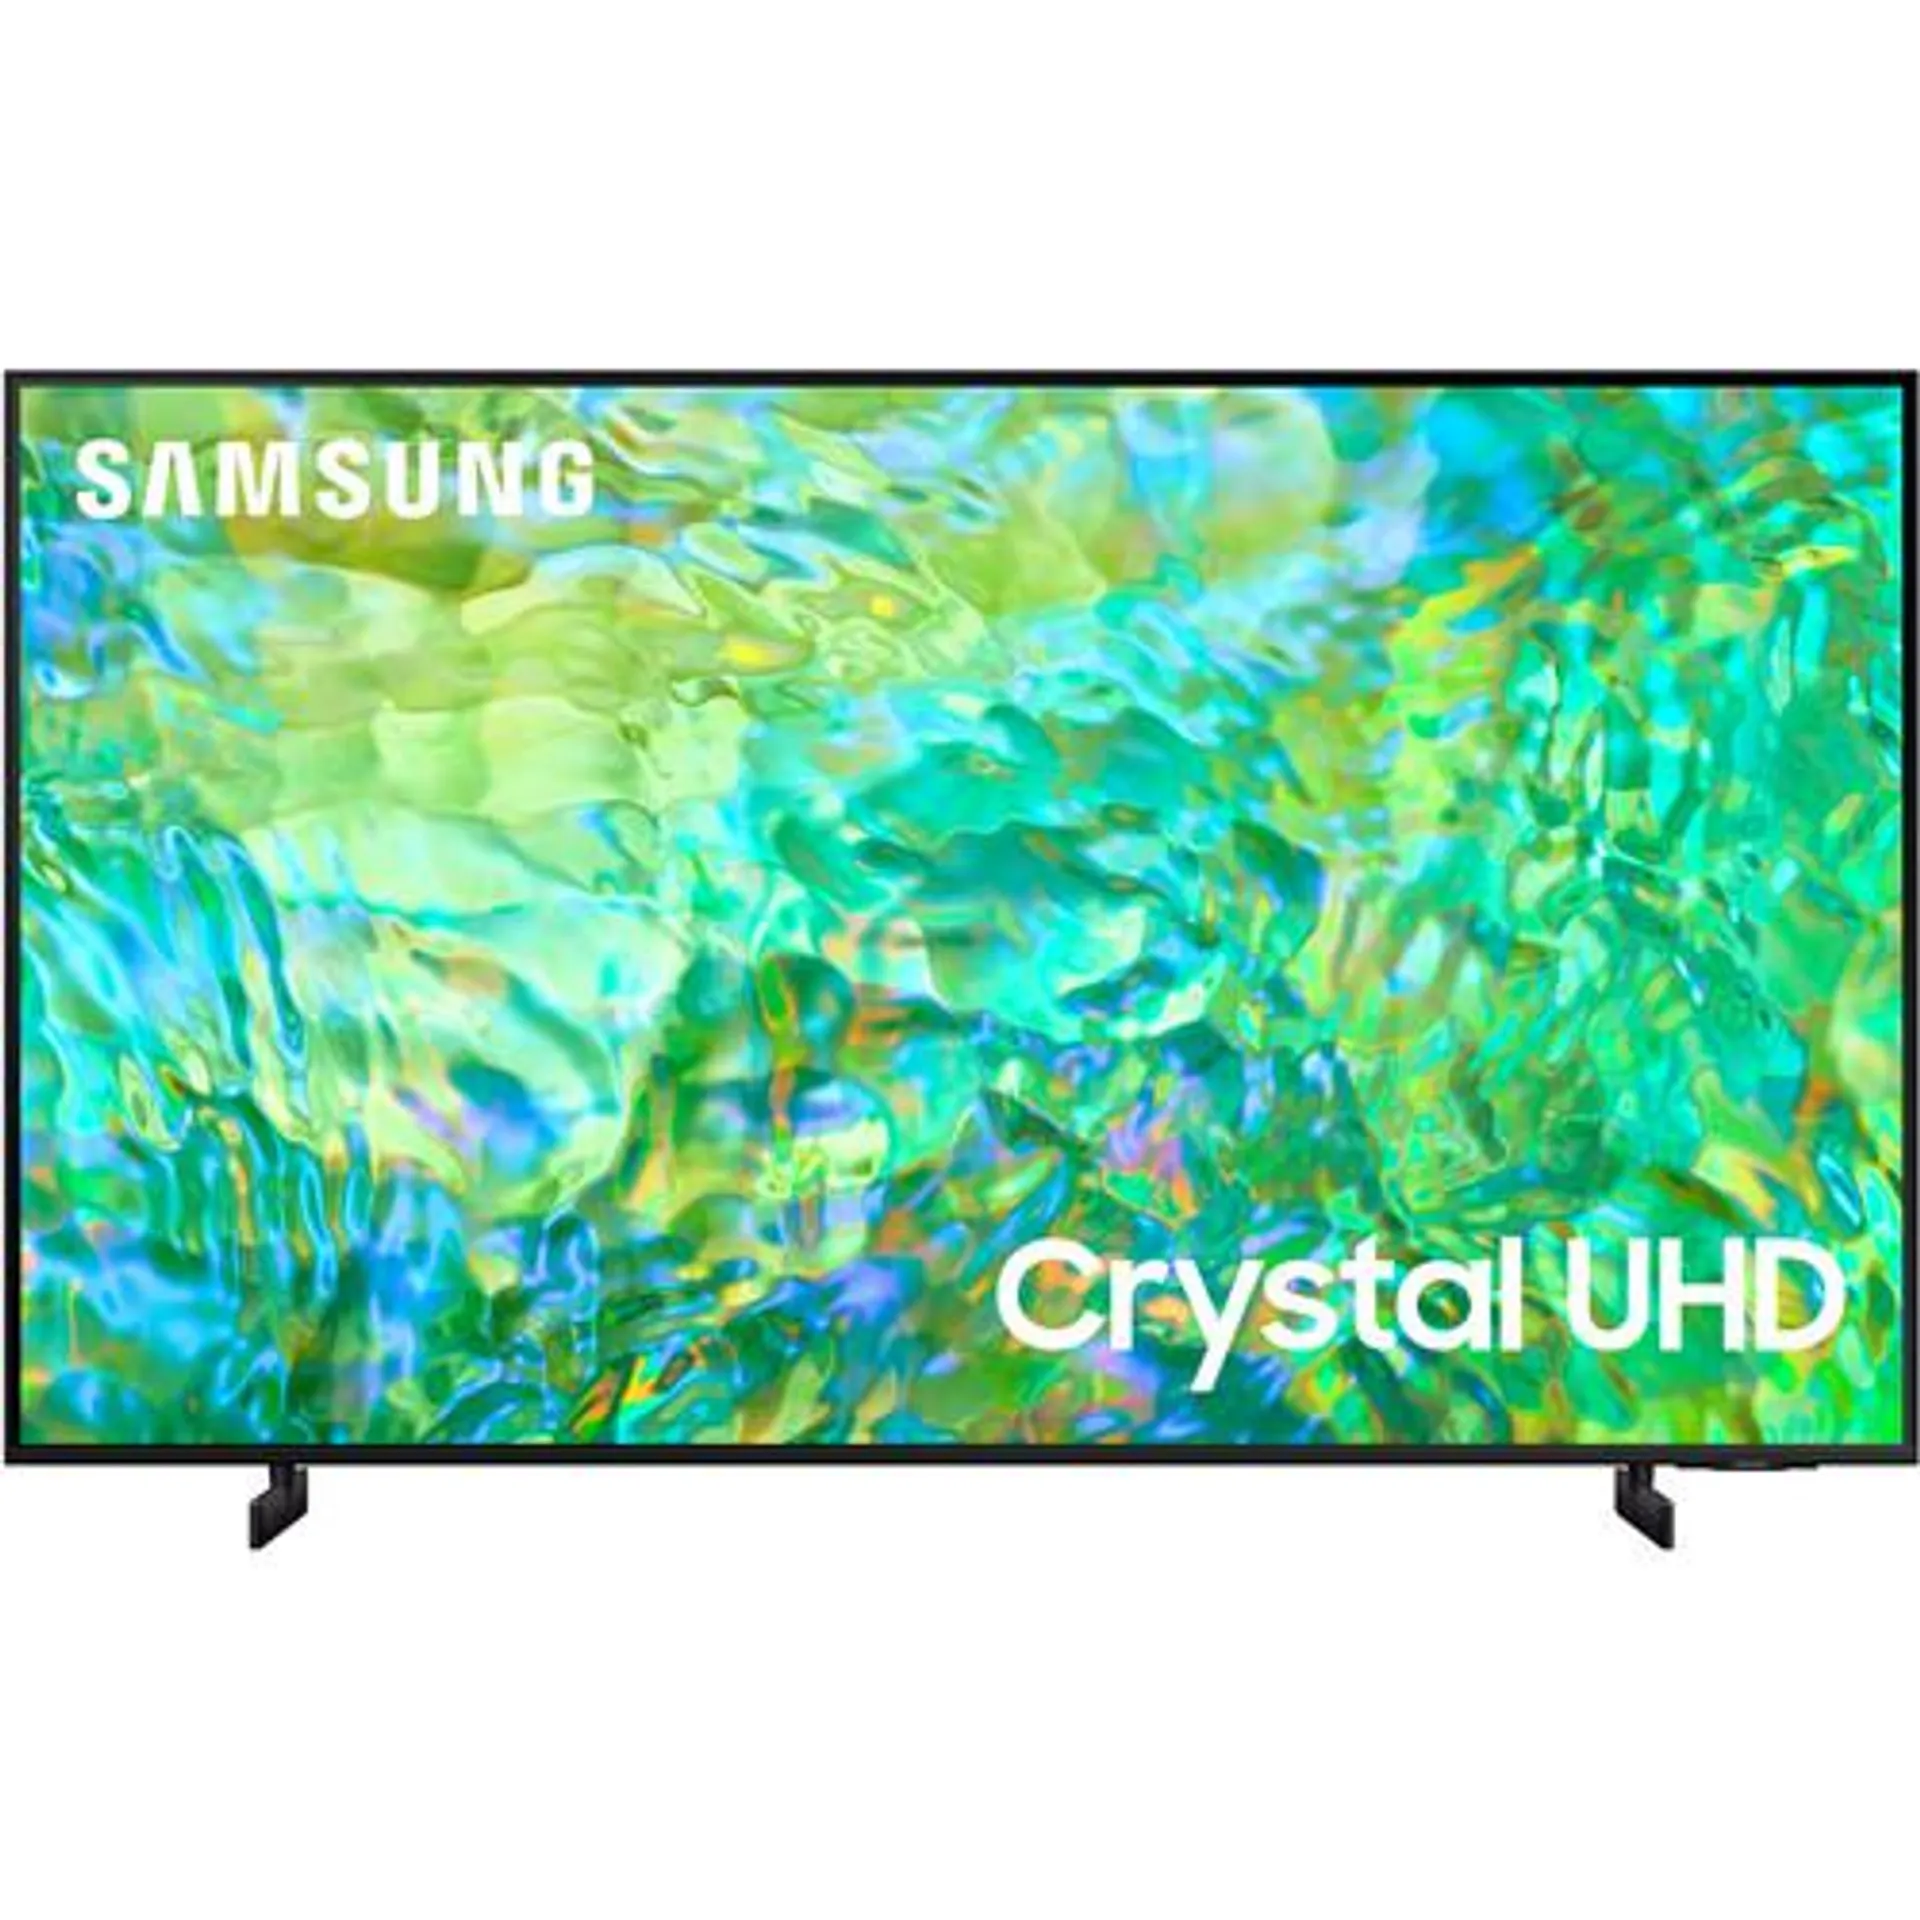 Samsung CU8000 Crystal UHD 50" 4K HDR Smart LED TV